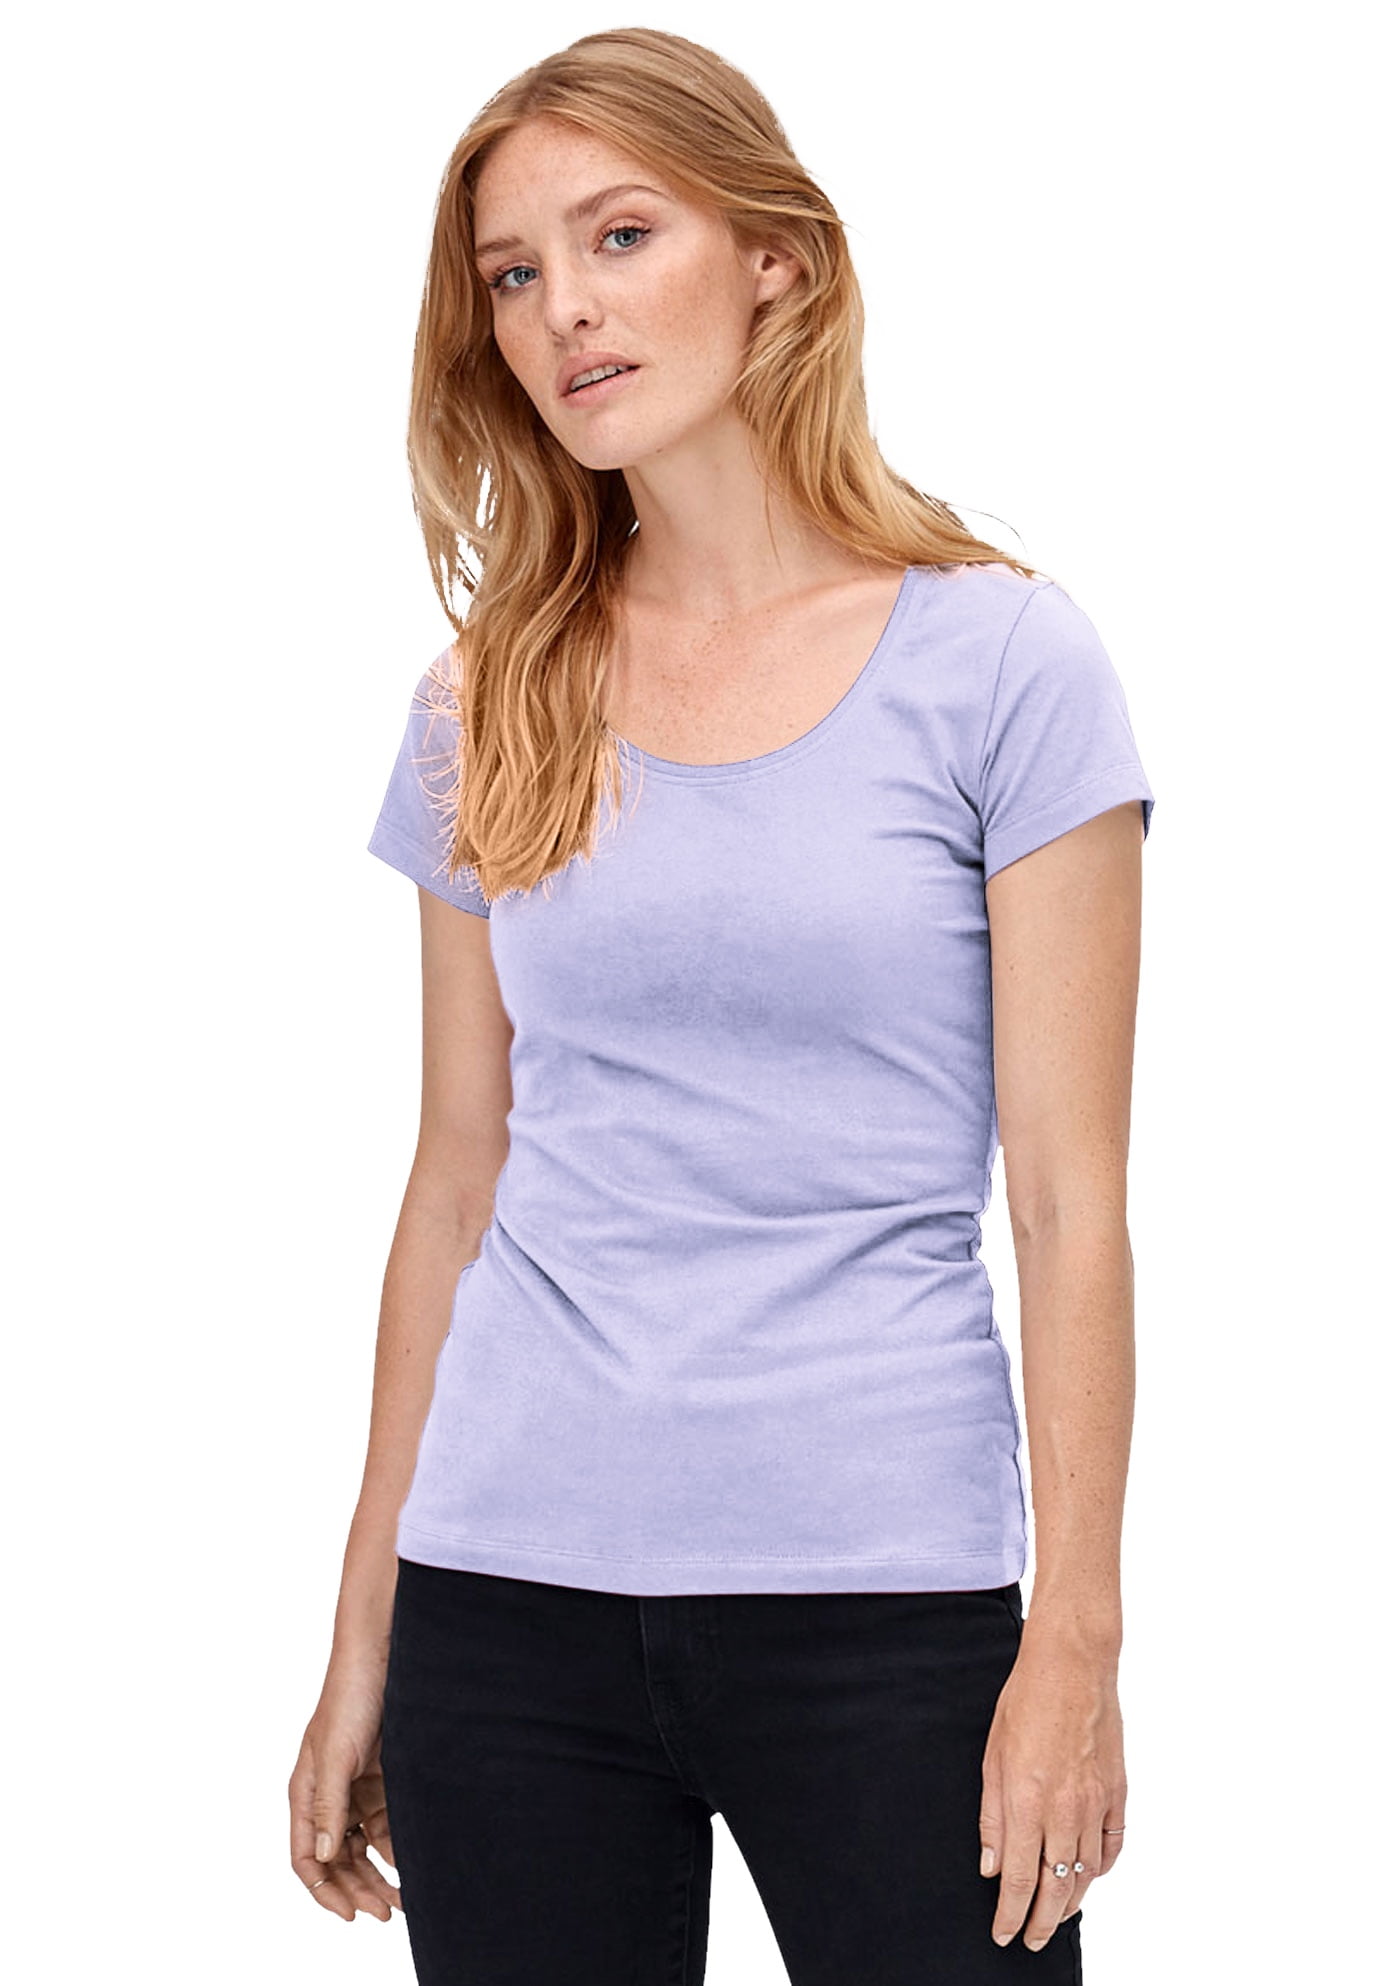 Ellos - Ellos Women's Plus Size Scoop Neck Tee T-Shirt - Walmart.com ...